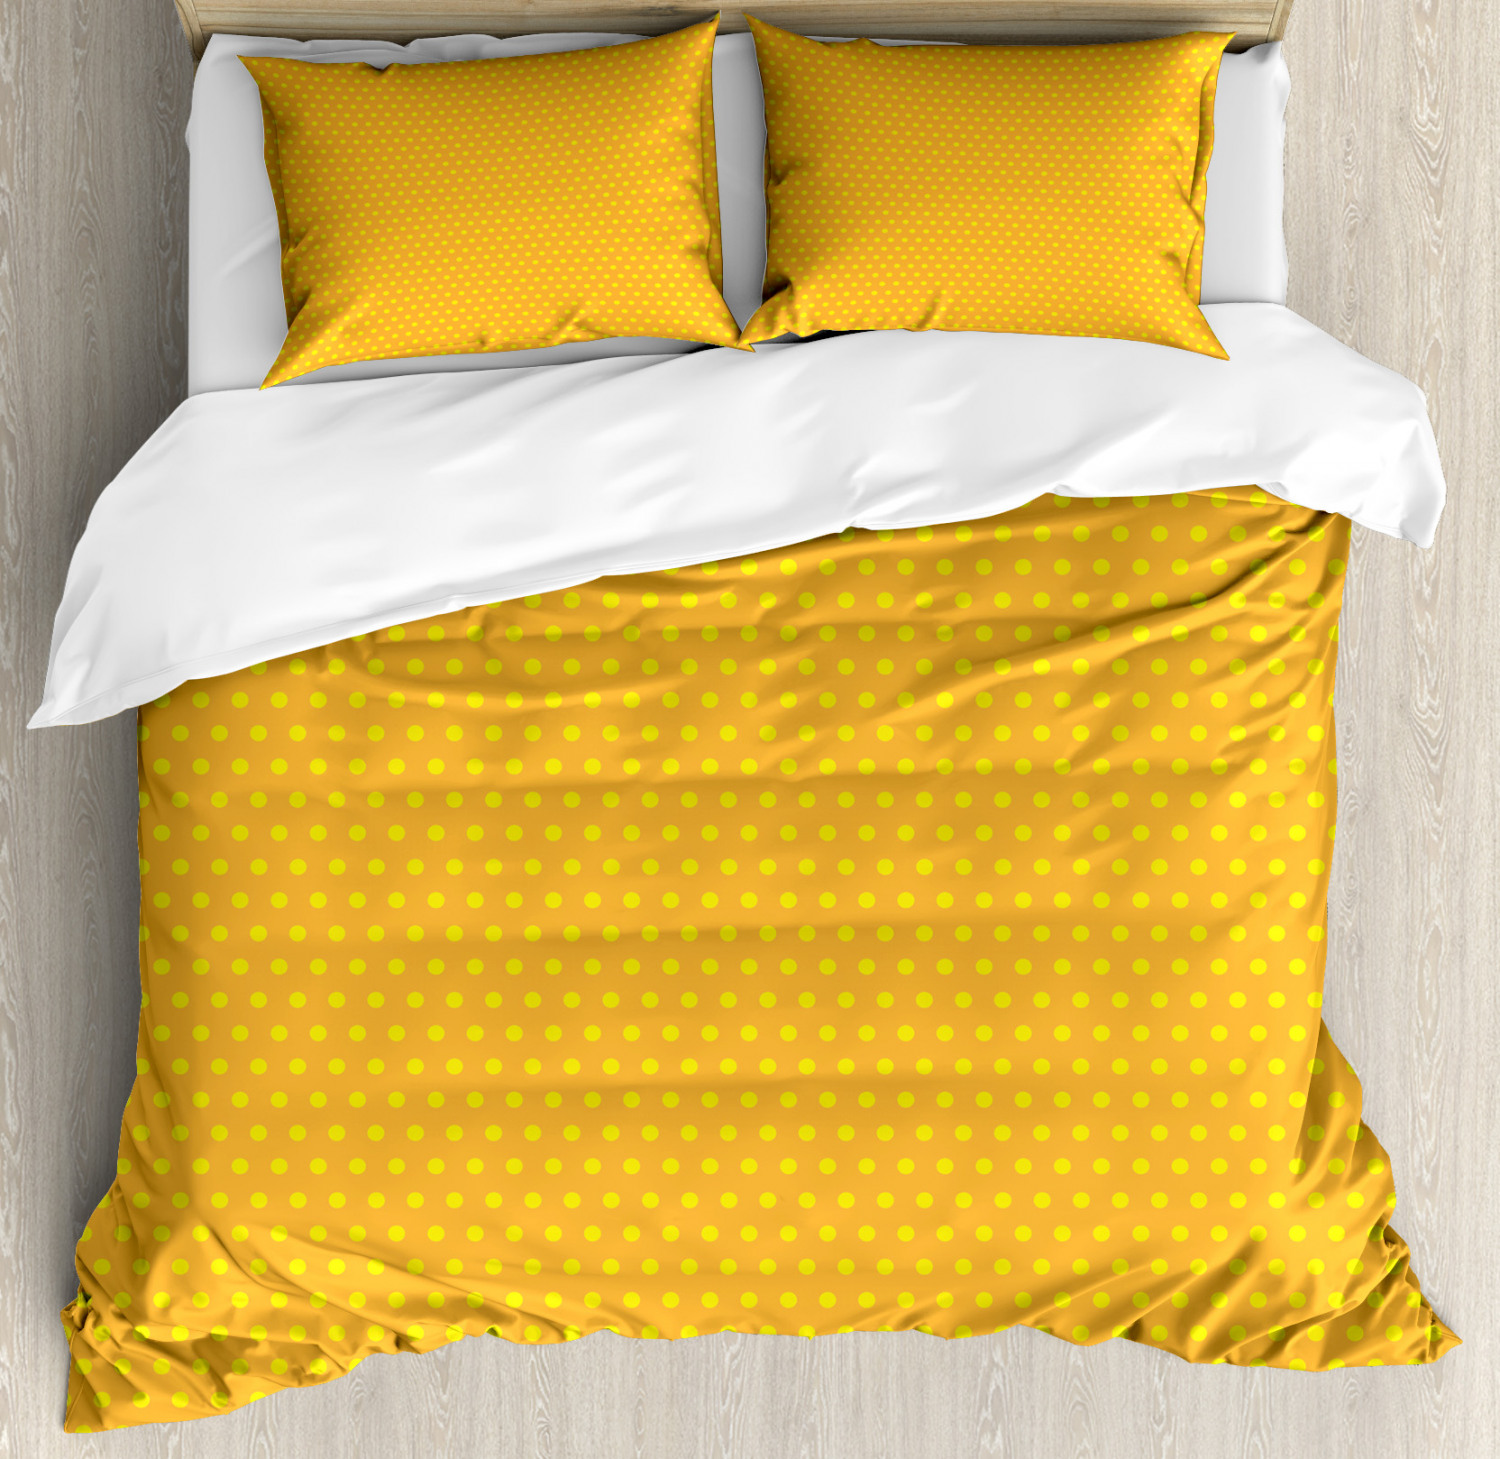 Retro Duvet Cover Set With Pillow Shams Vintage Dots Marigold